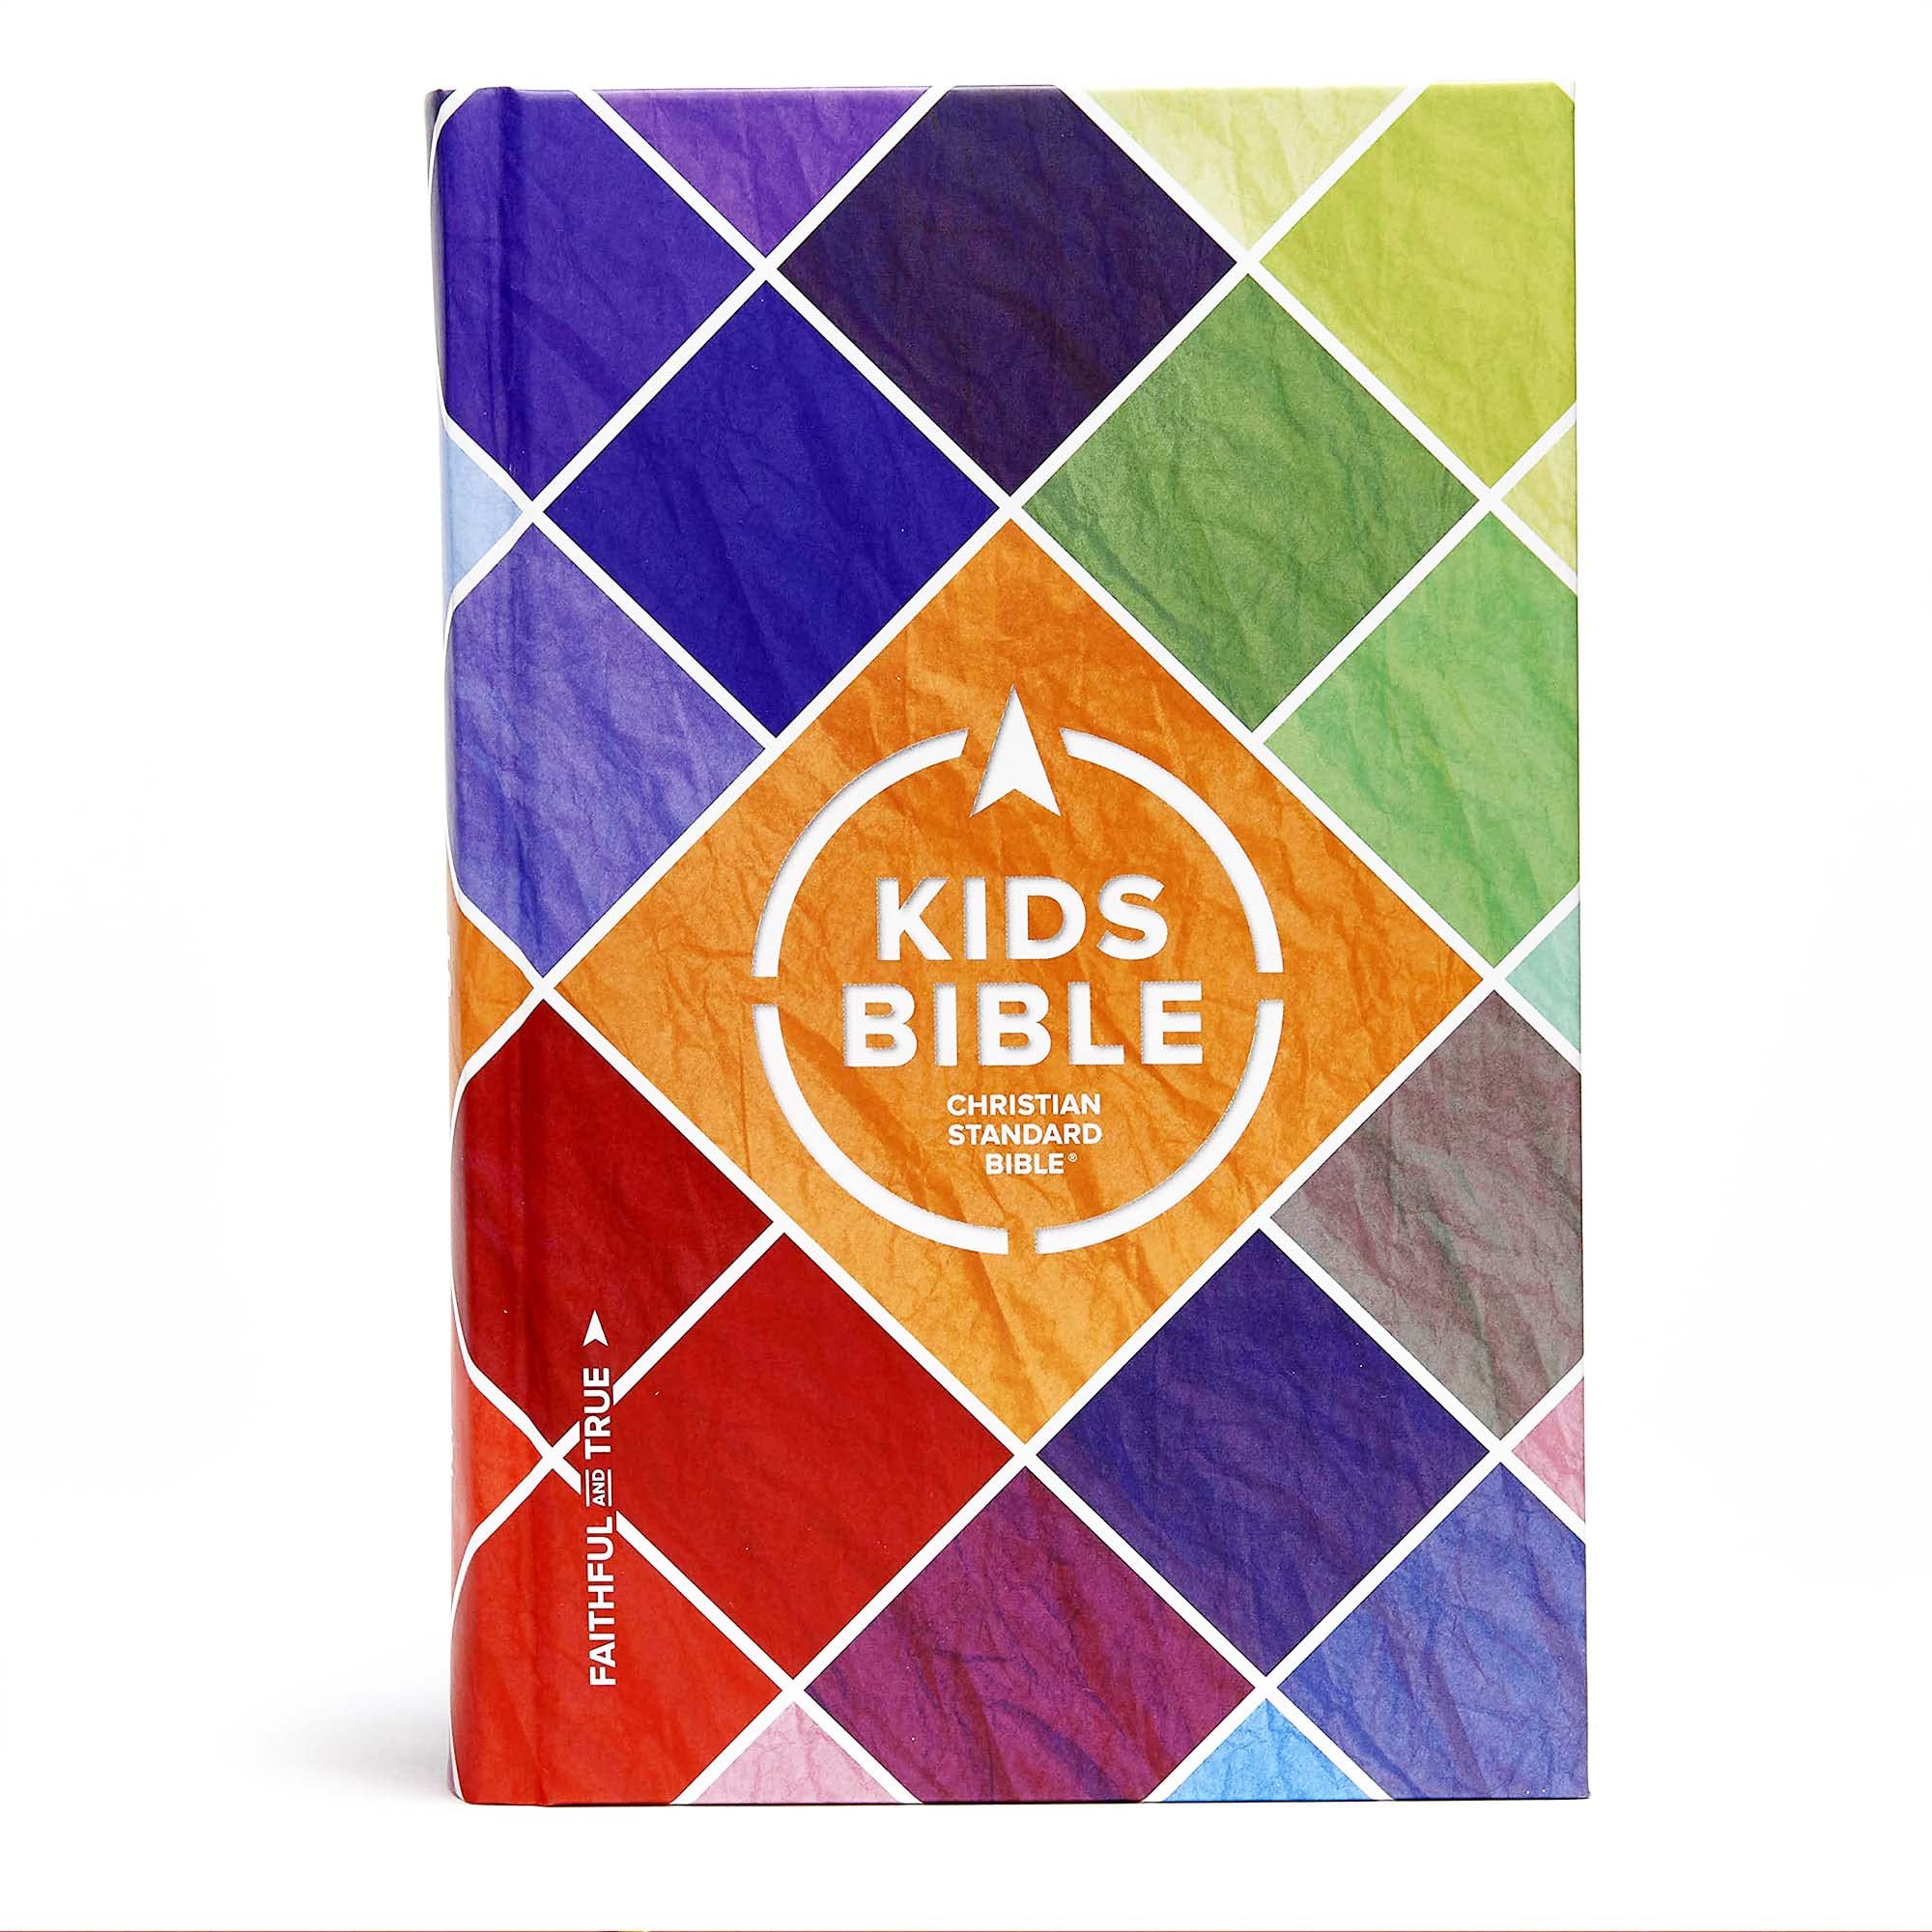 CSB Kids Bible, Hardcover by Csb Bibles by Holman